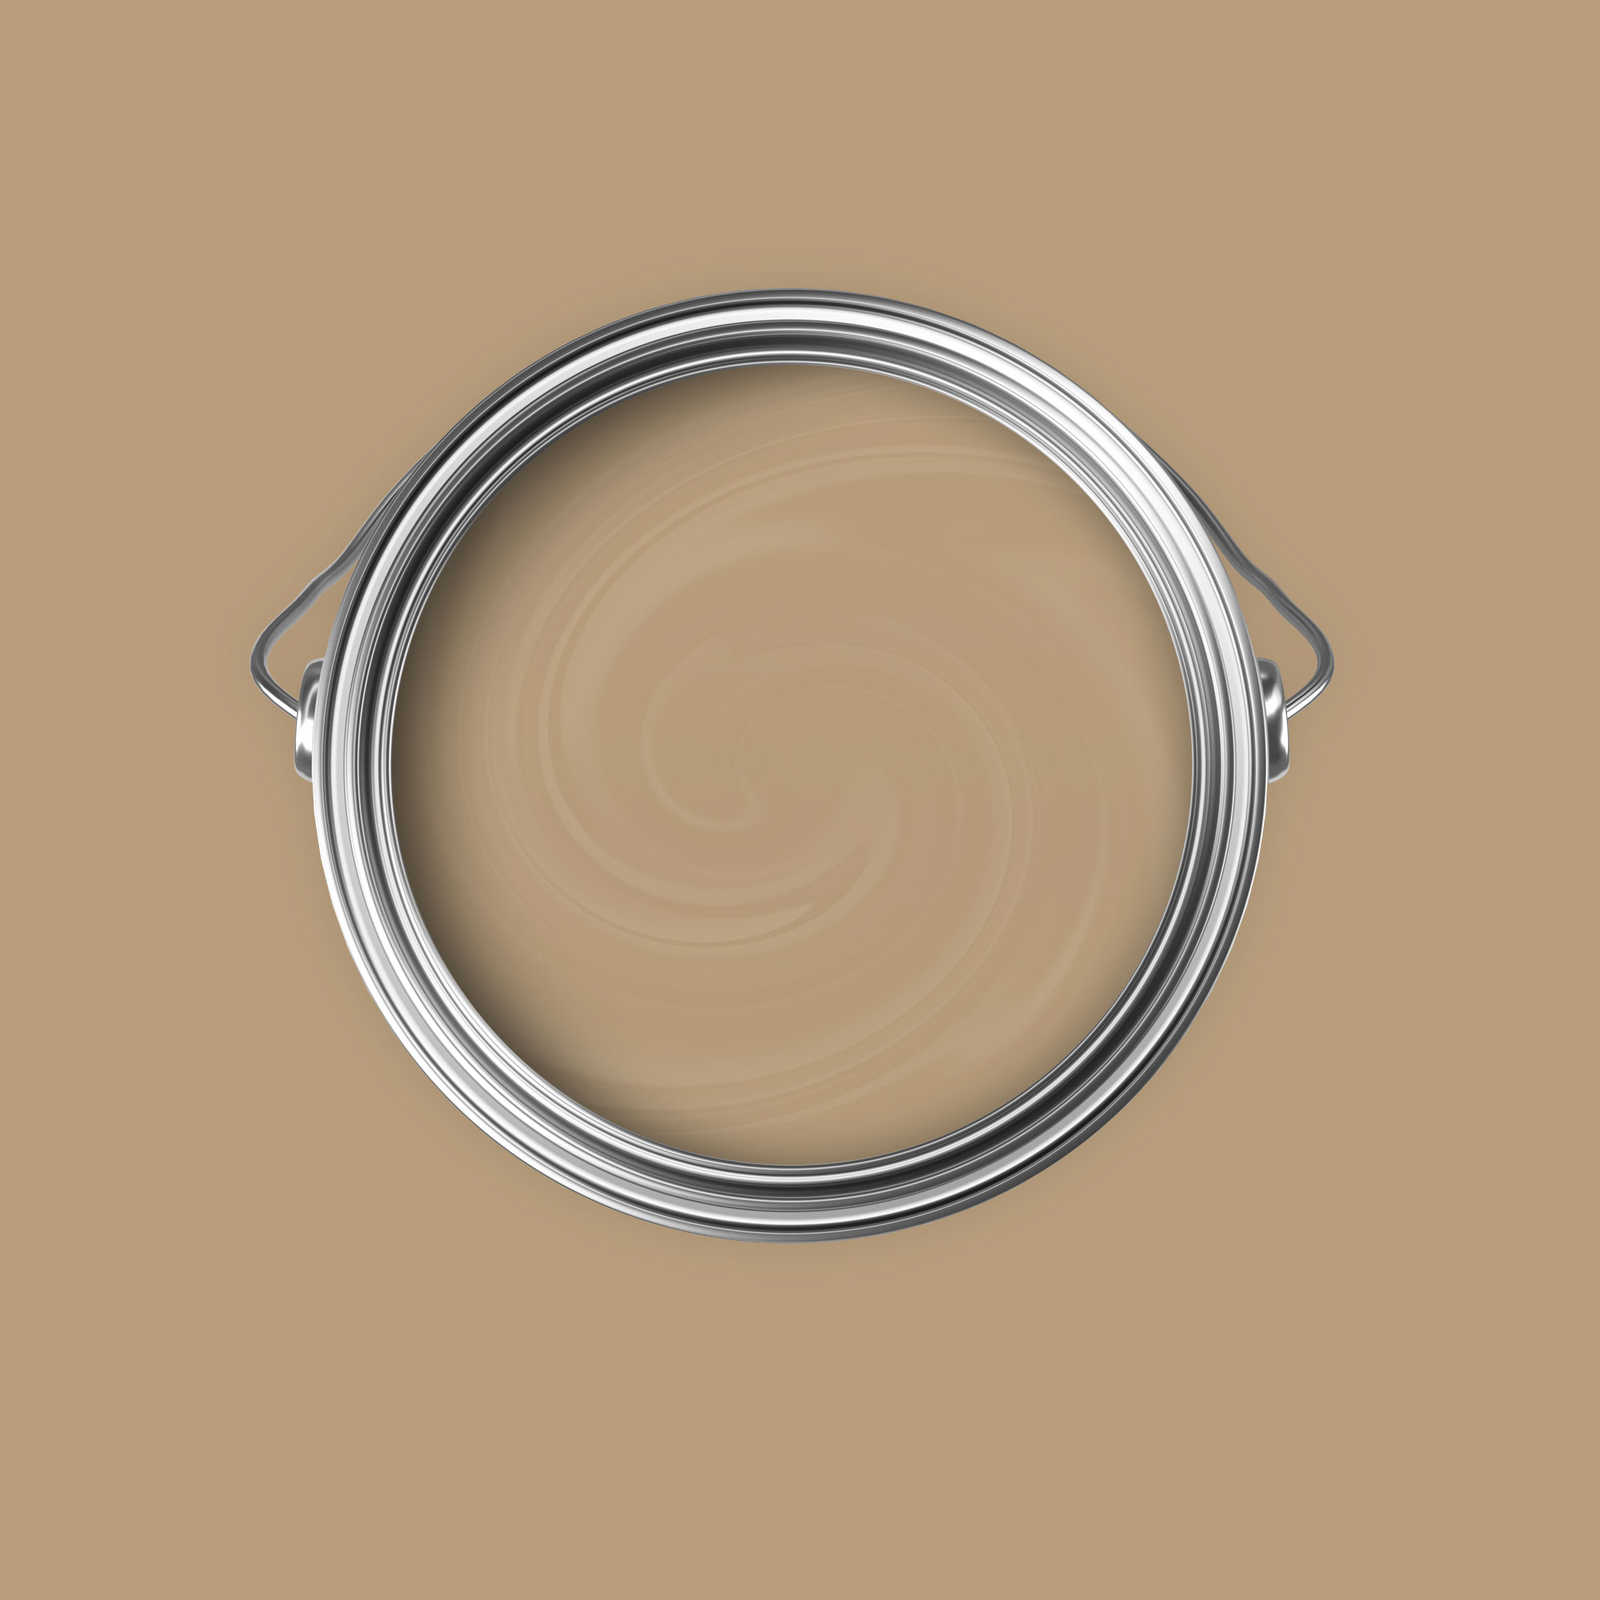             Premium Wandfarbe natürliches Cappuccino »Essential Earth« NW710 – 5 Liter
        